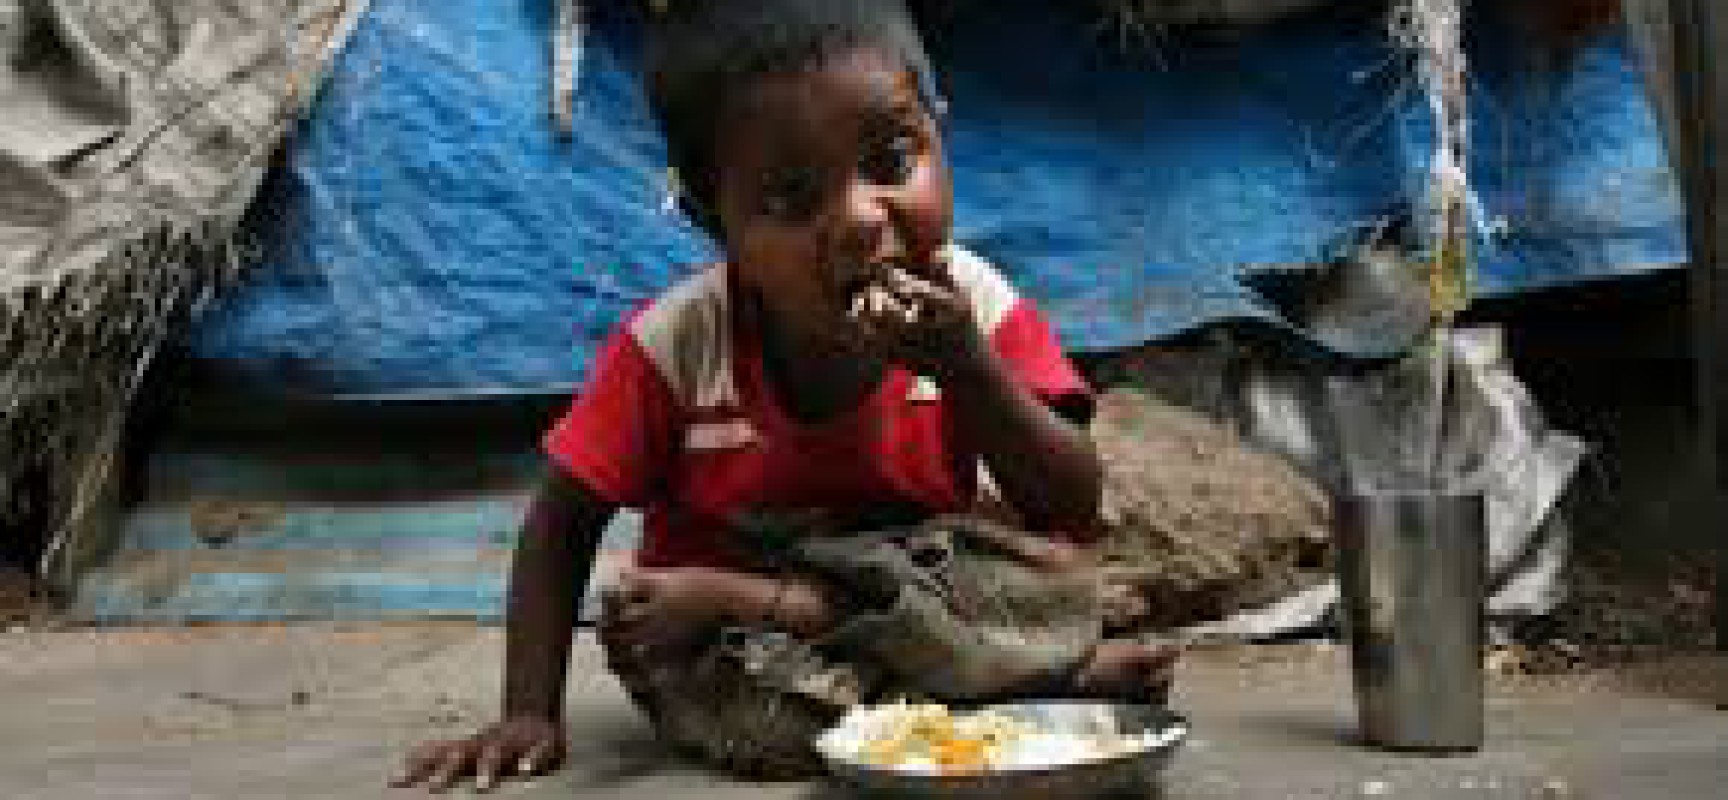 Malnutrition in India